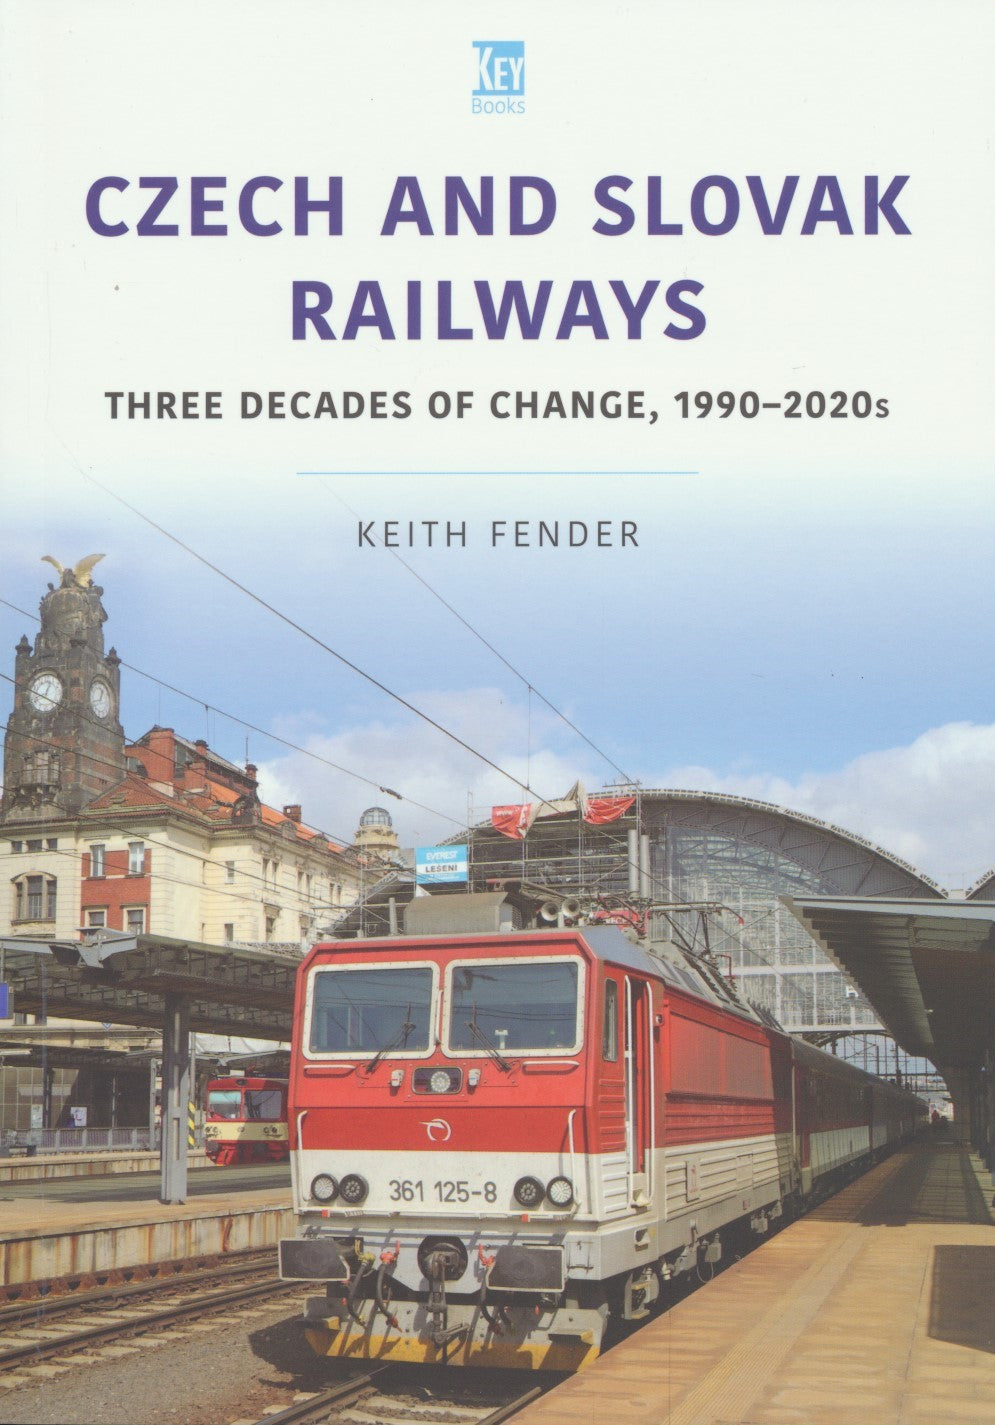 World Railways Series, Volume  2: Czech and Slovak Railways Three Decades of Change, 1990-2020s